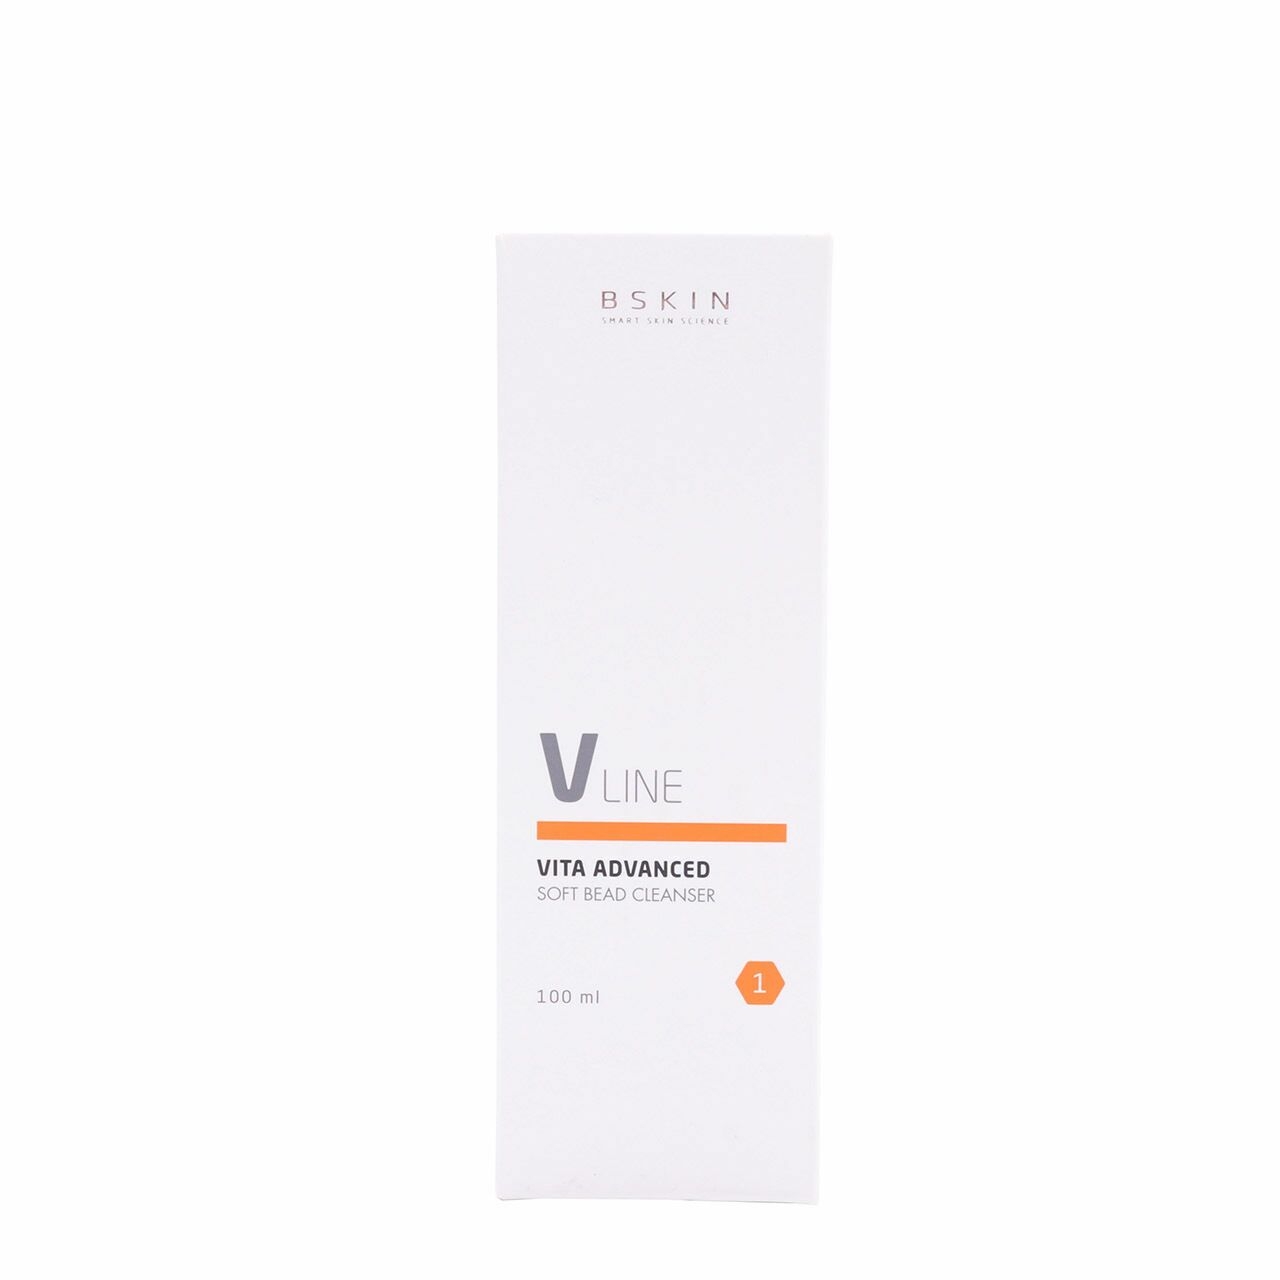 BSKIN Vline Vita Advance Skin Care